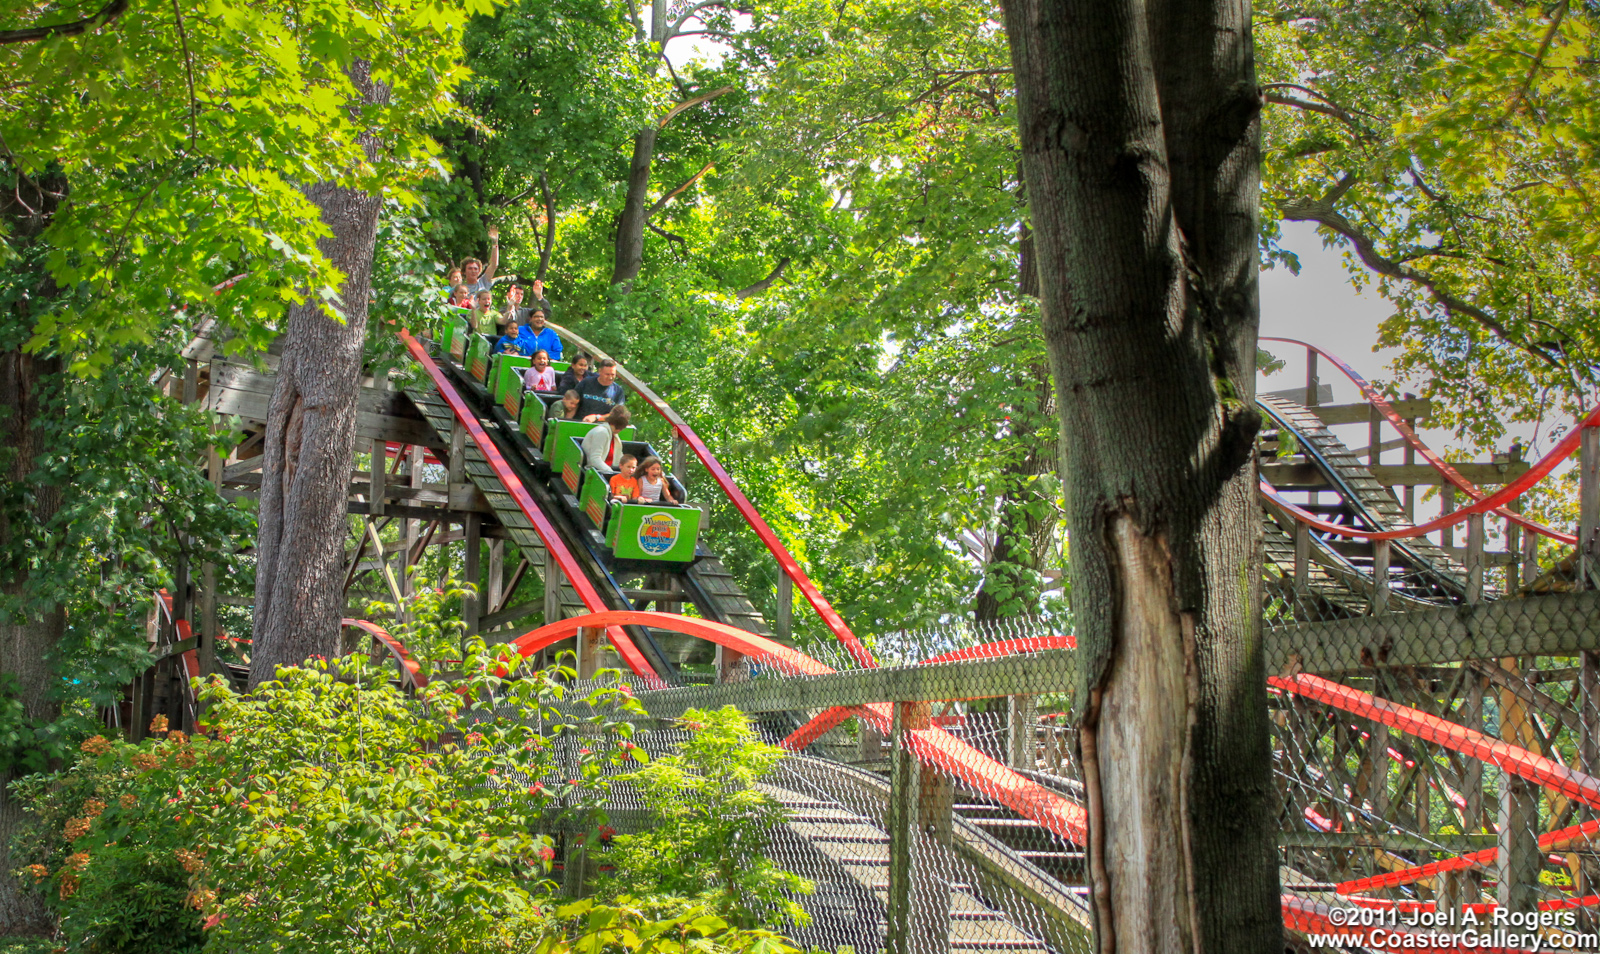 Comet roller coaster built by Philadelphia Toboggan Coasters, Inc.